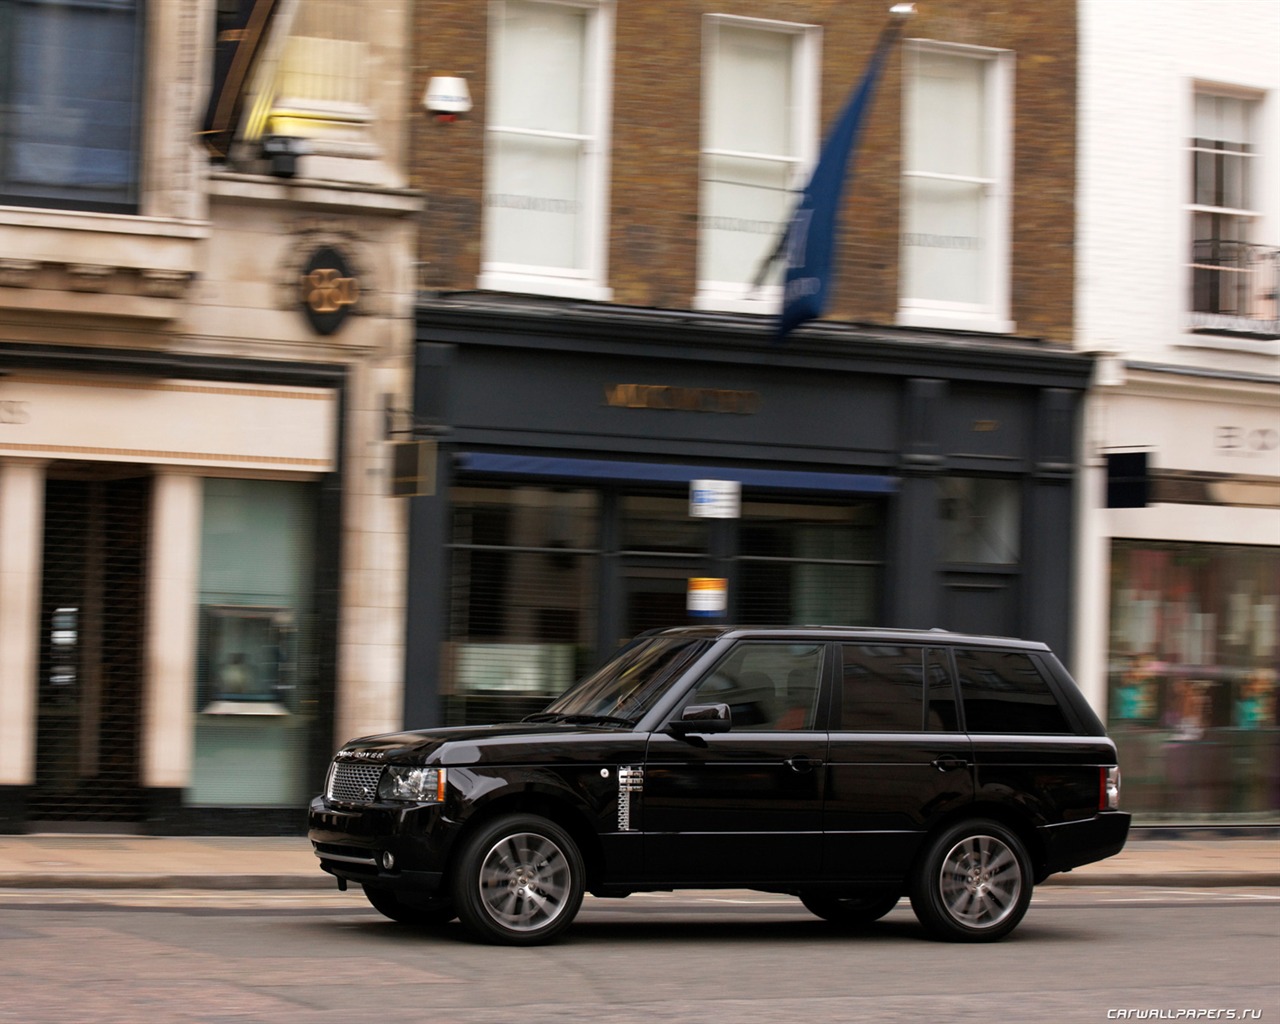 Land Rover Range Rover Black Edition - 2011 路虎8 - 1280x1024